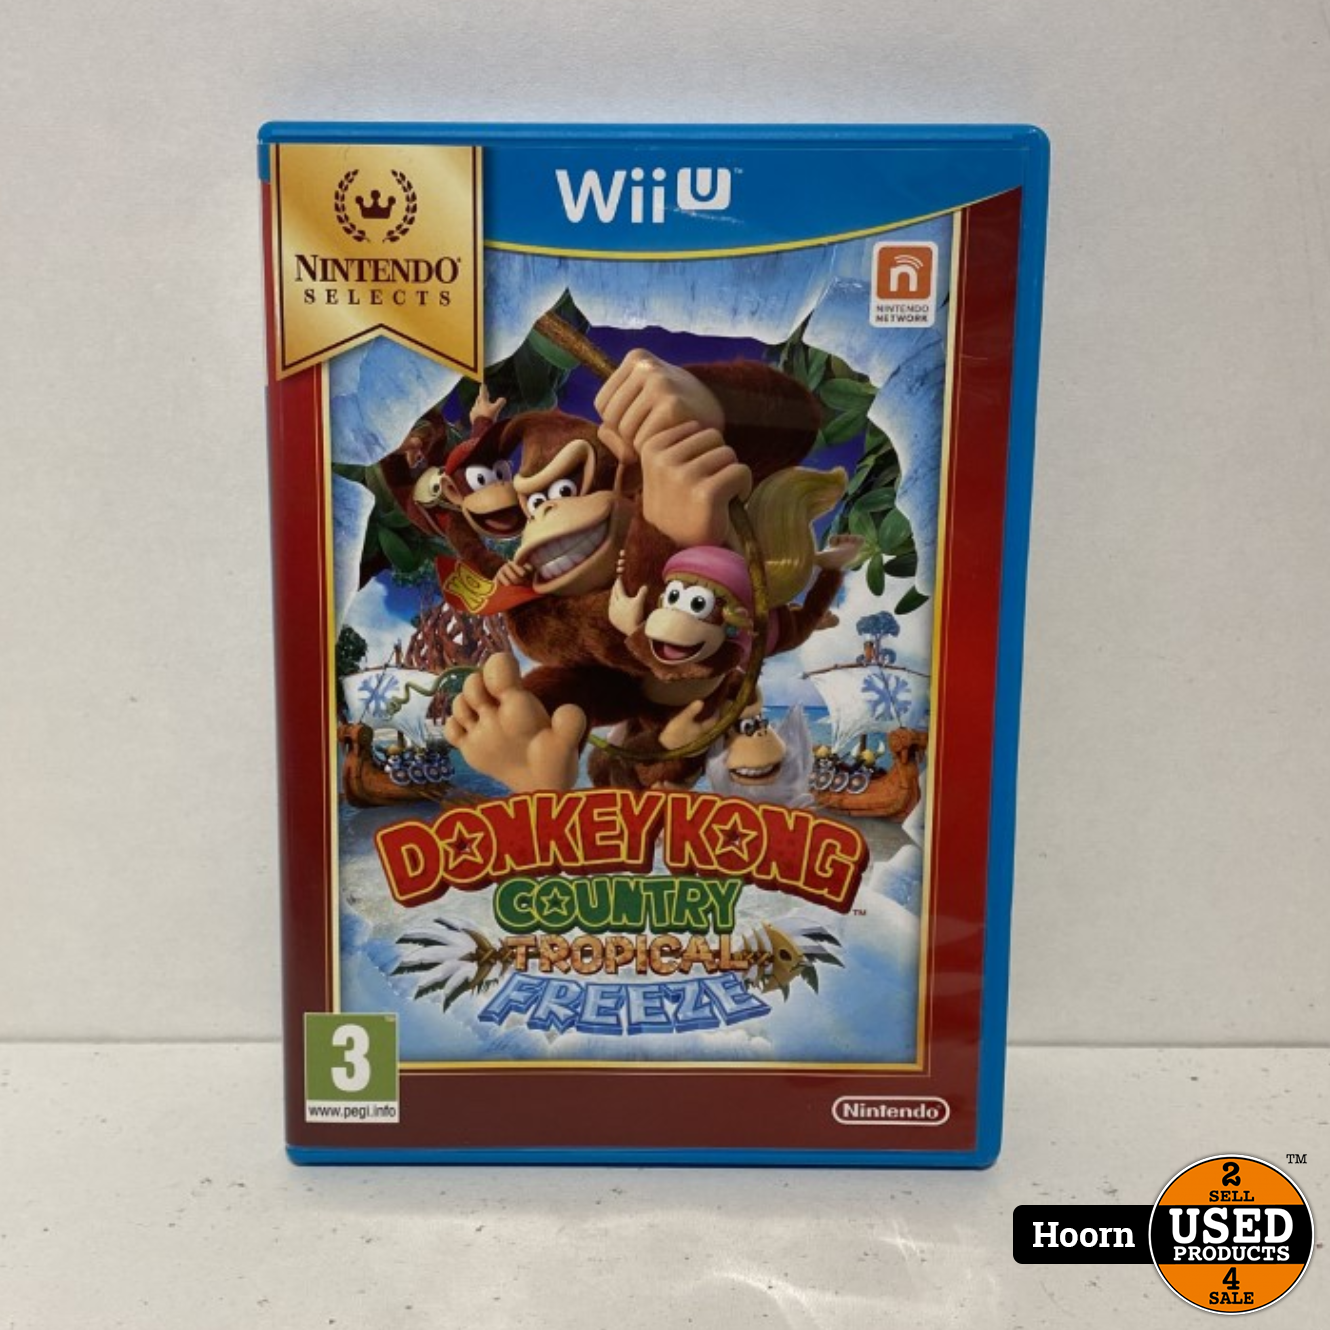 Huiswerk maken Bowling Worden Nintendo Wii U Game: Donkey Kong Country Tropical Freeze - Used Products  Hoorn